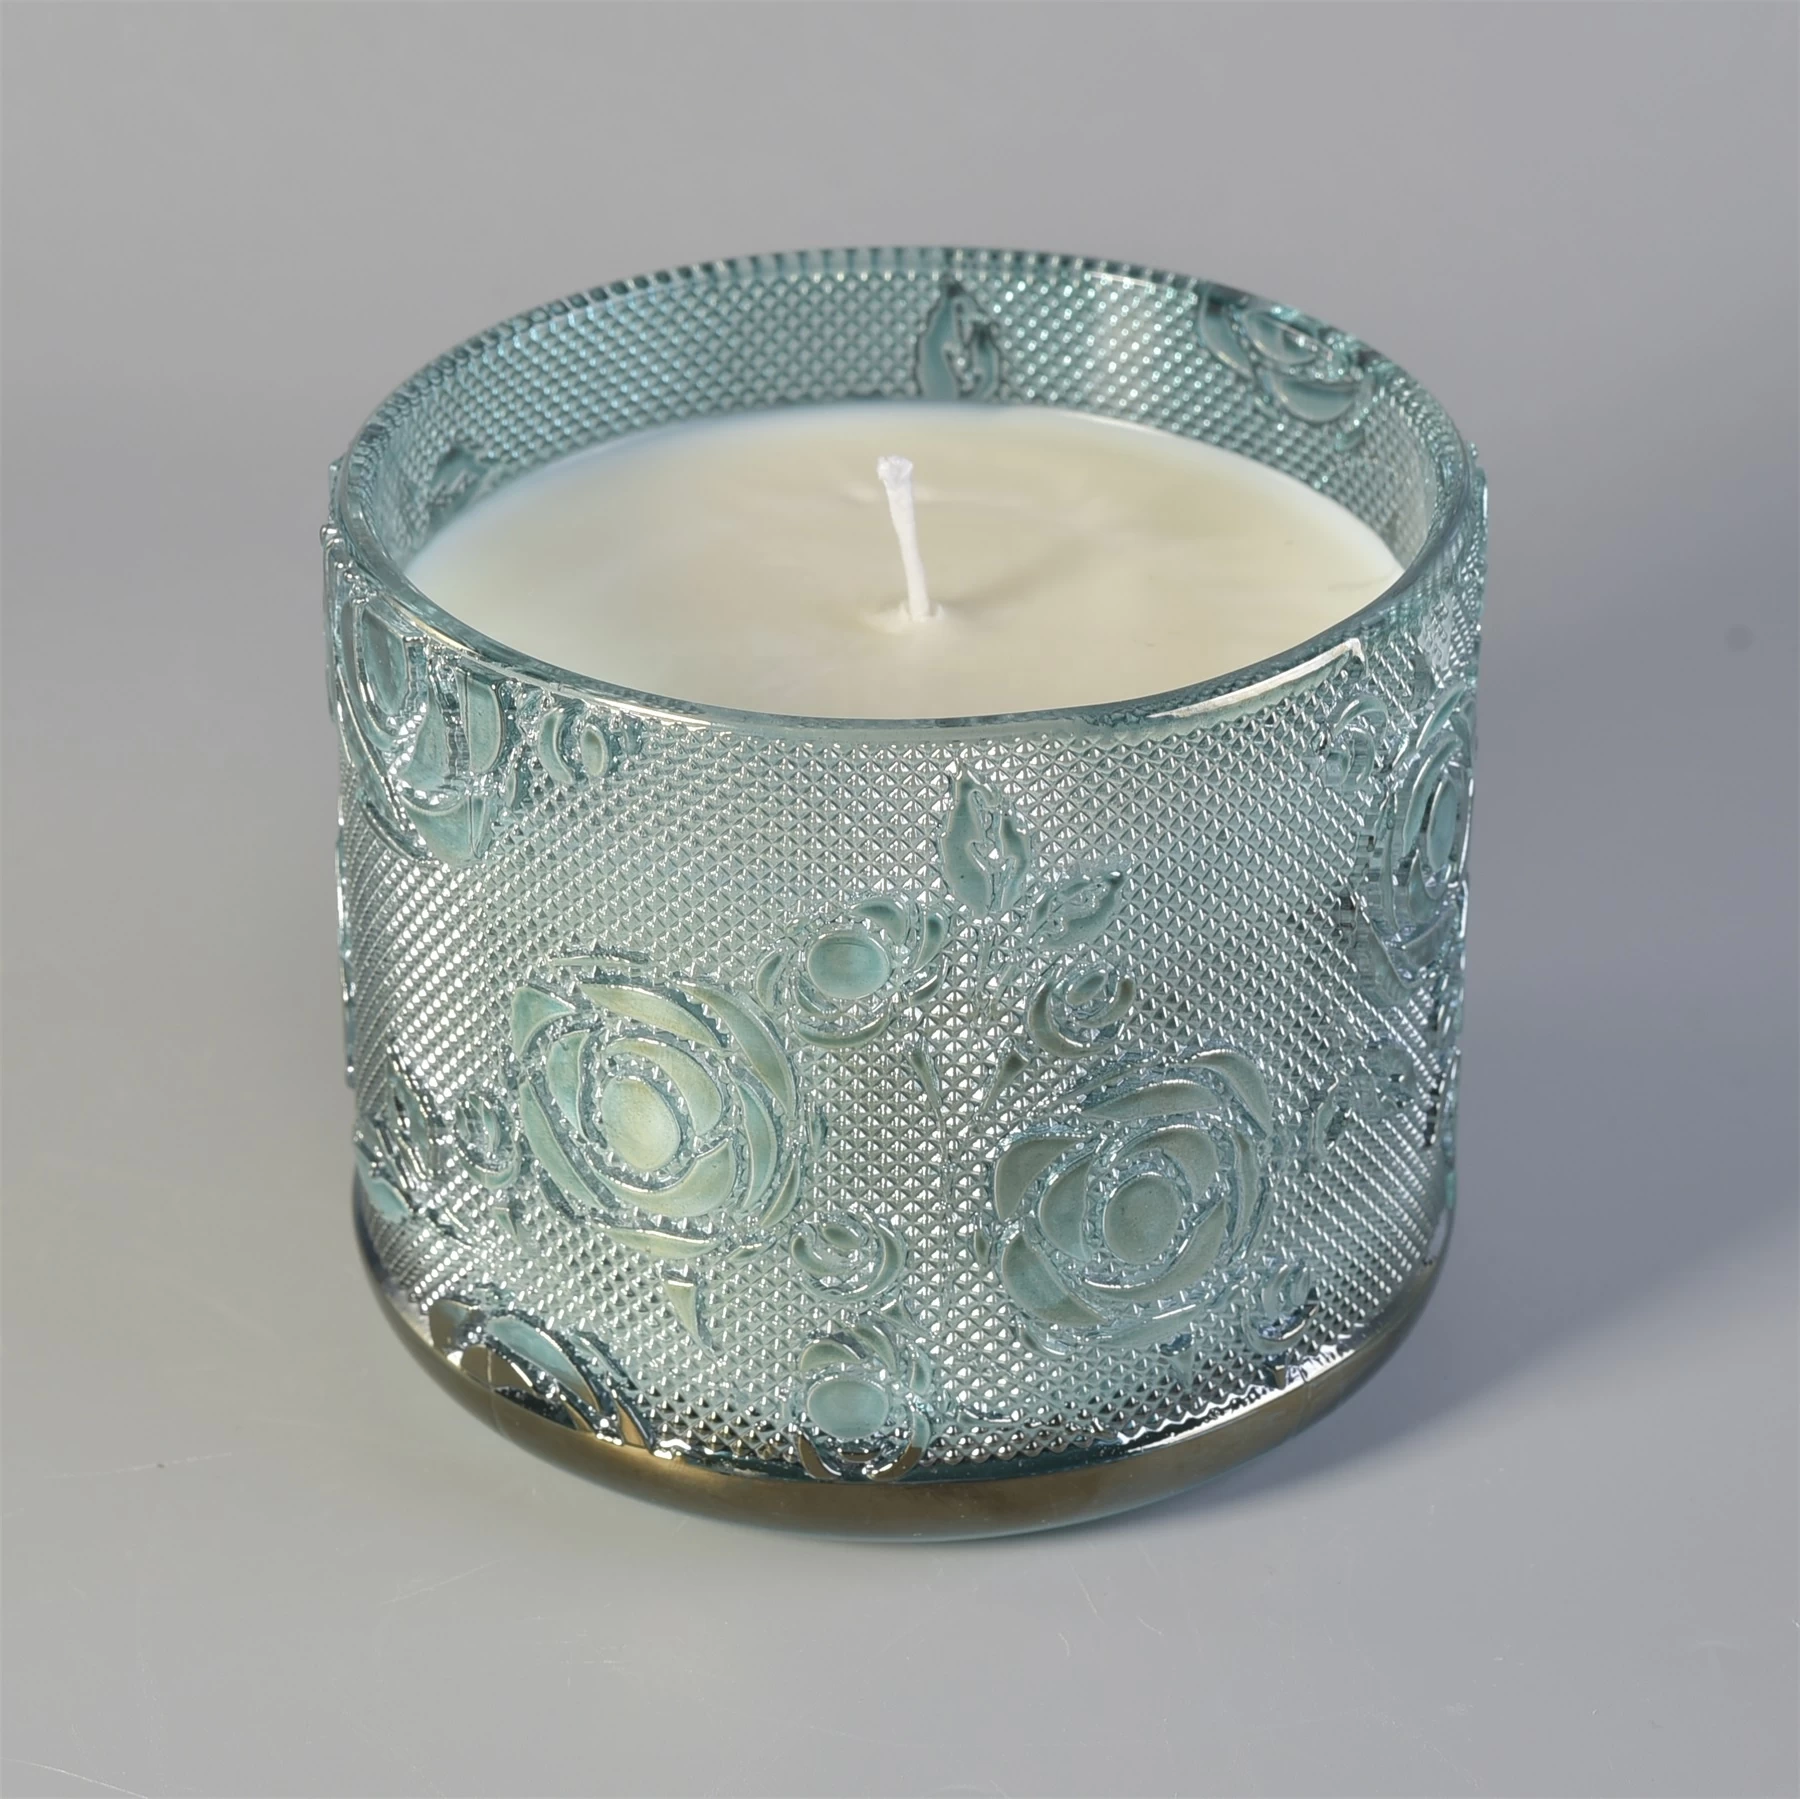 Sunny large decorative empty luxury scented rose 11oz candle jar